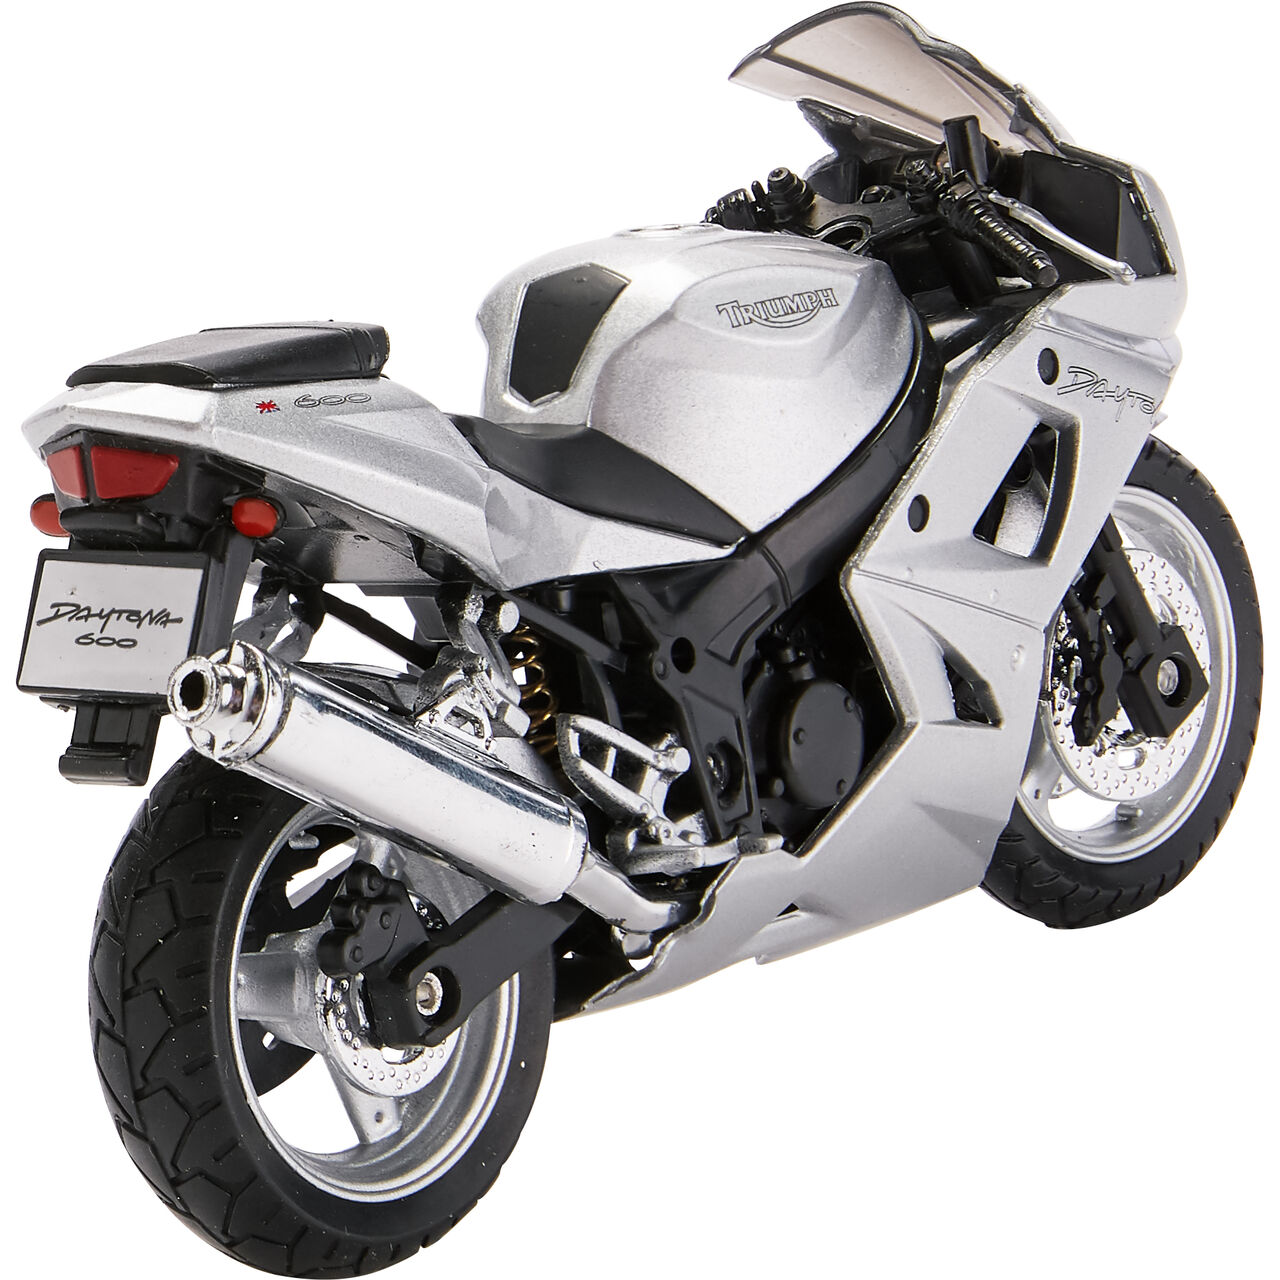 motorcycle model 1:18 Triumph Daytona 600